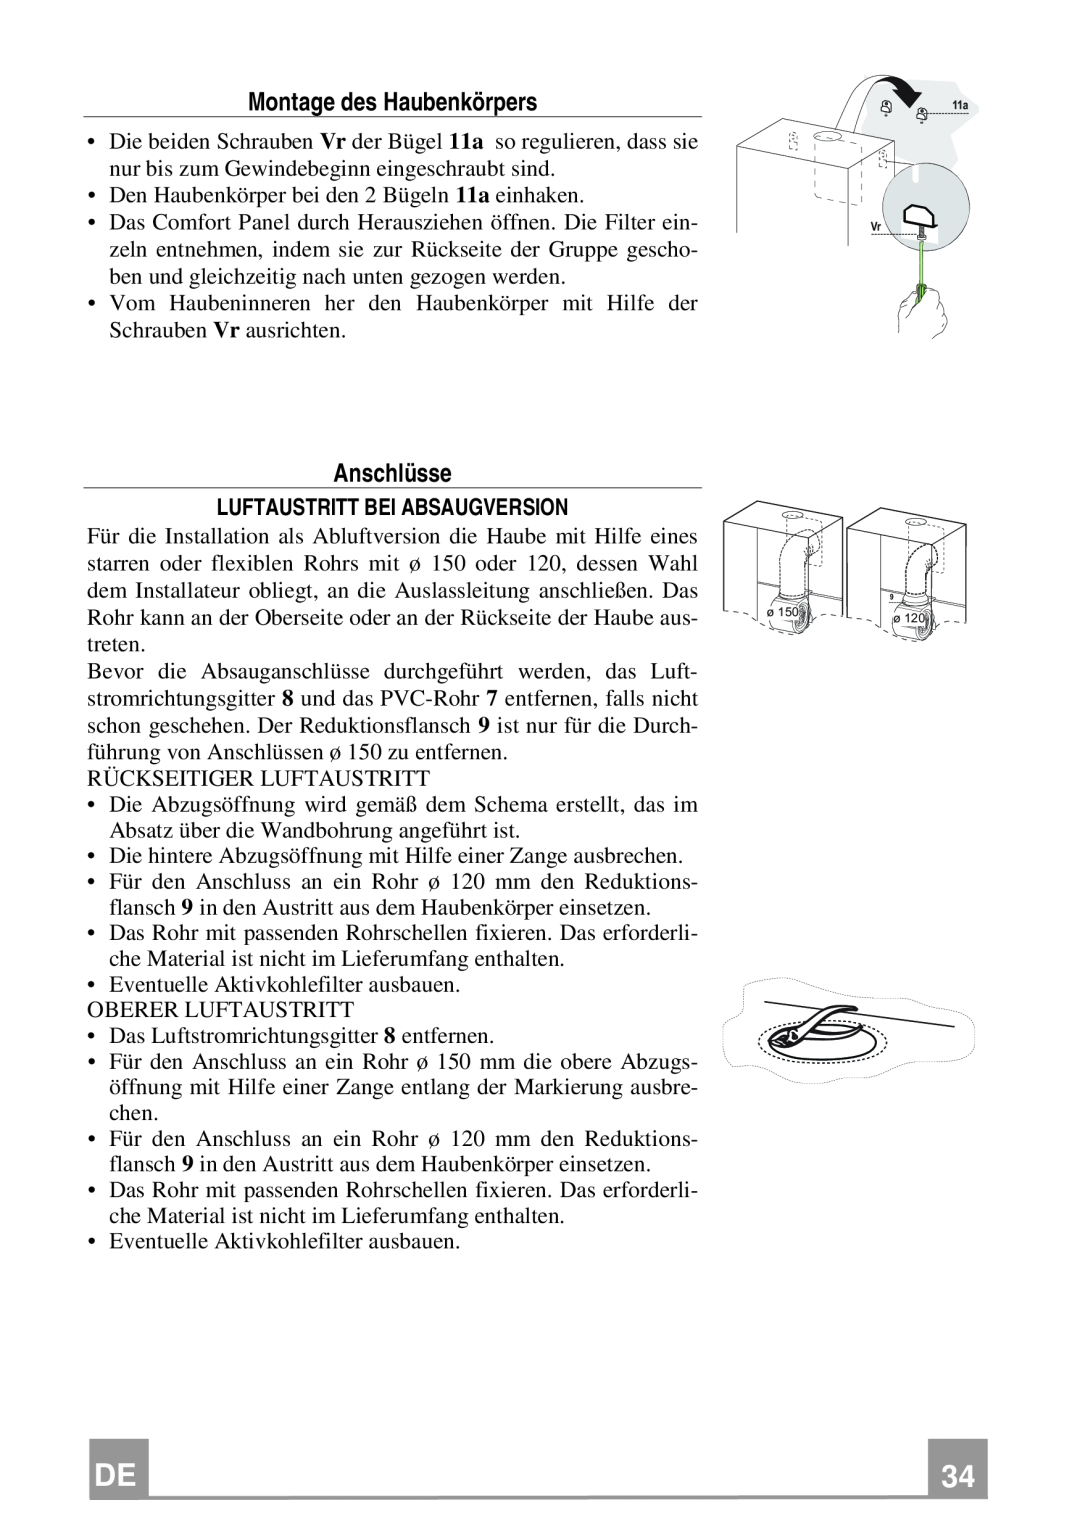 Franke Consumer Products FPL 606, FPL 906 manual Montage des Haubenkörpers, Anschlüsse, Luftaustritt Bei Absaugversion 